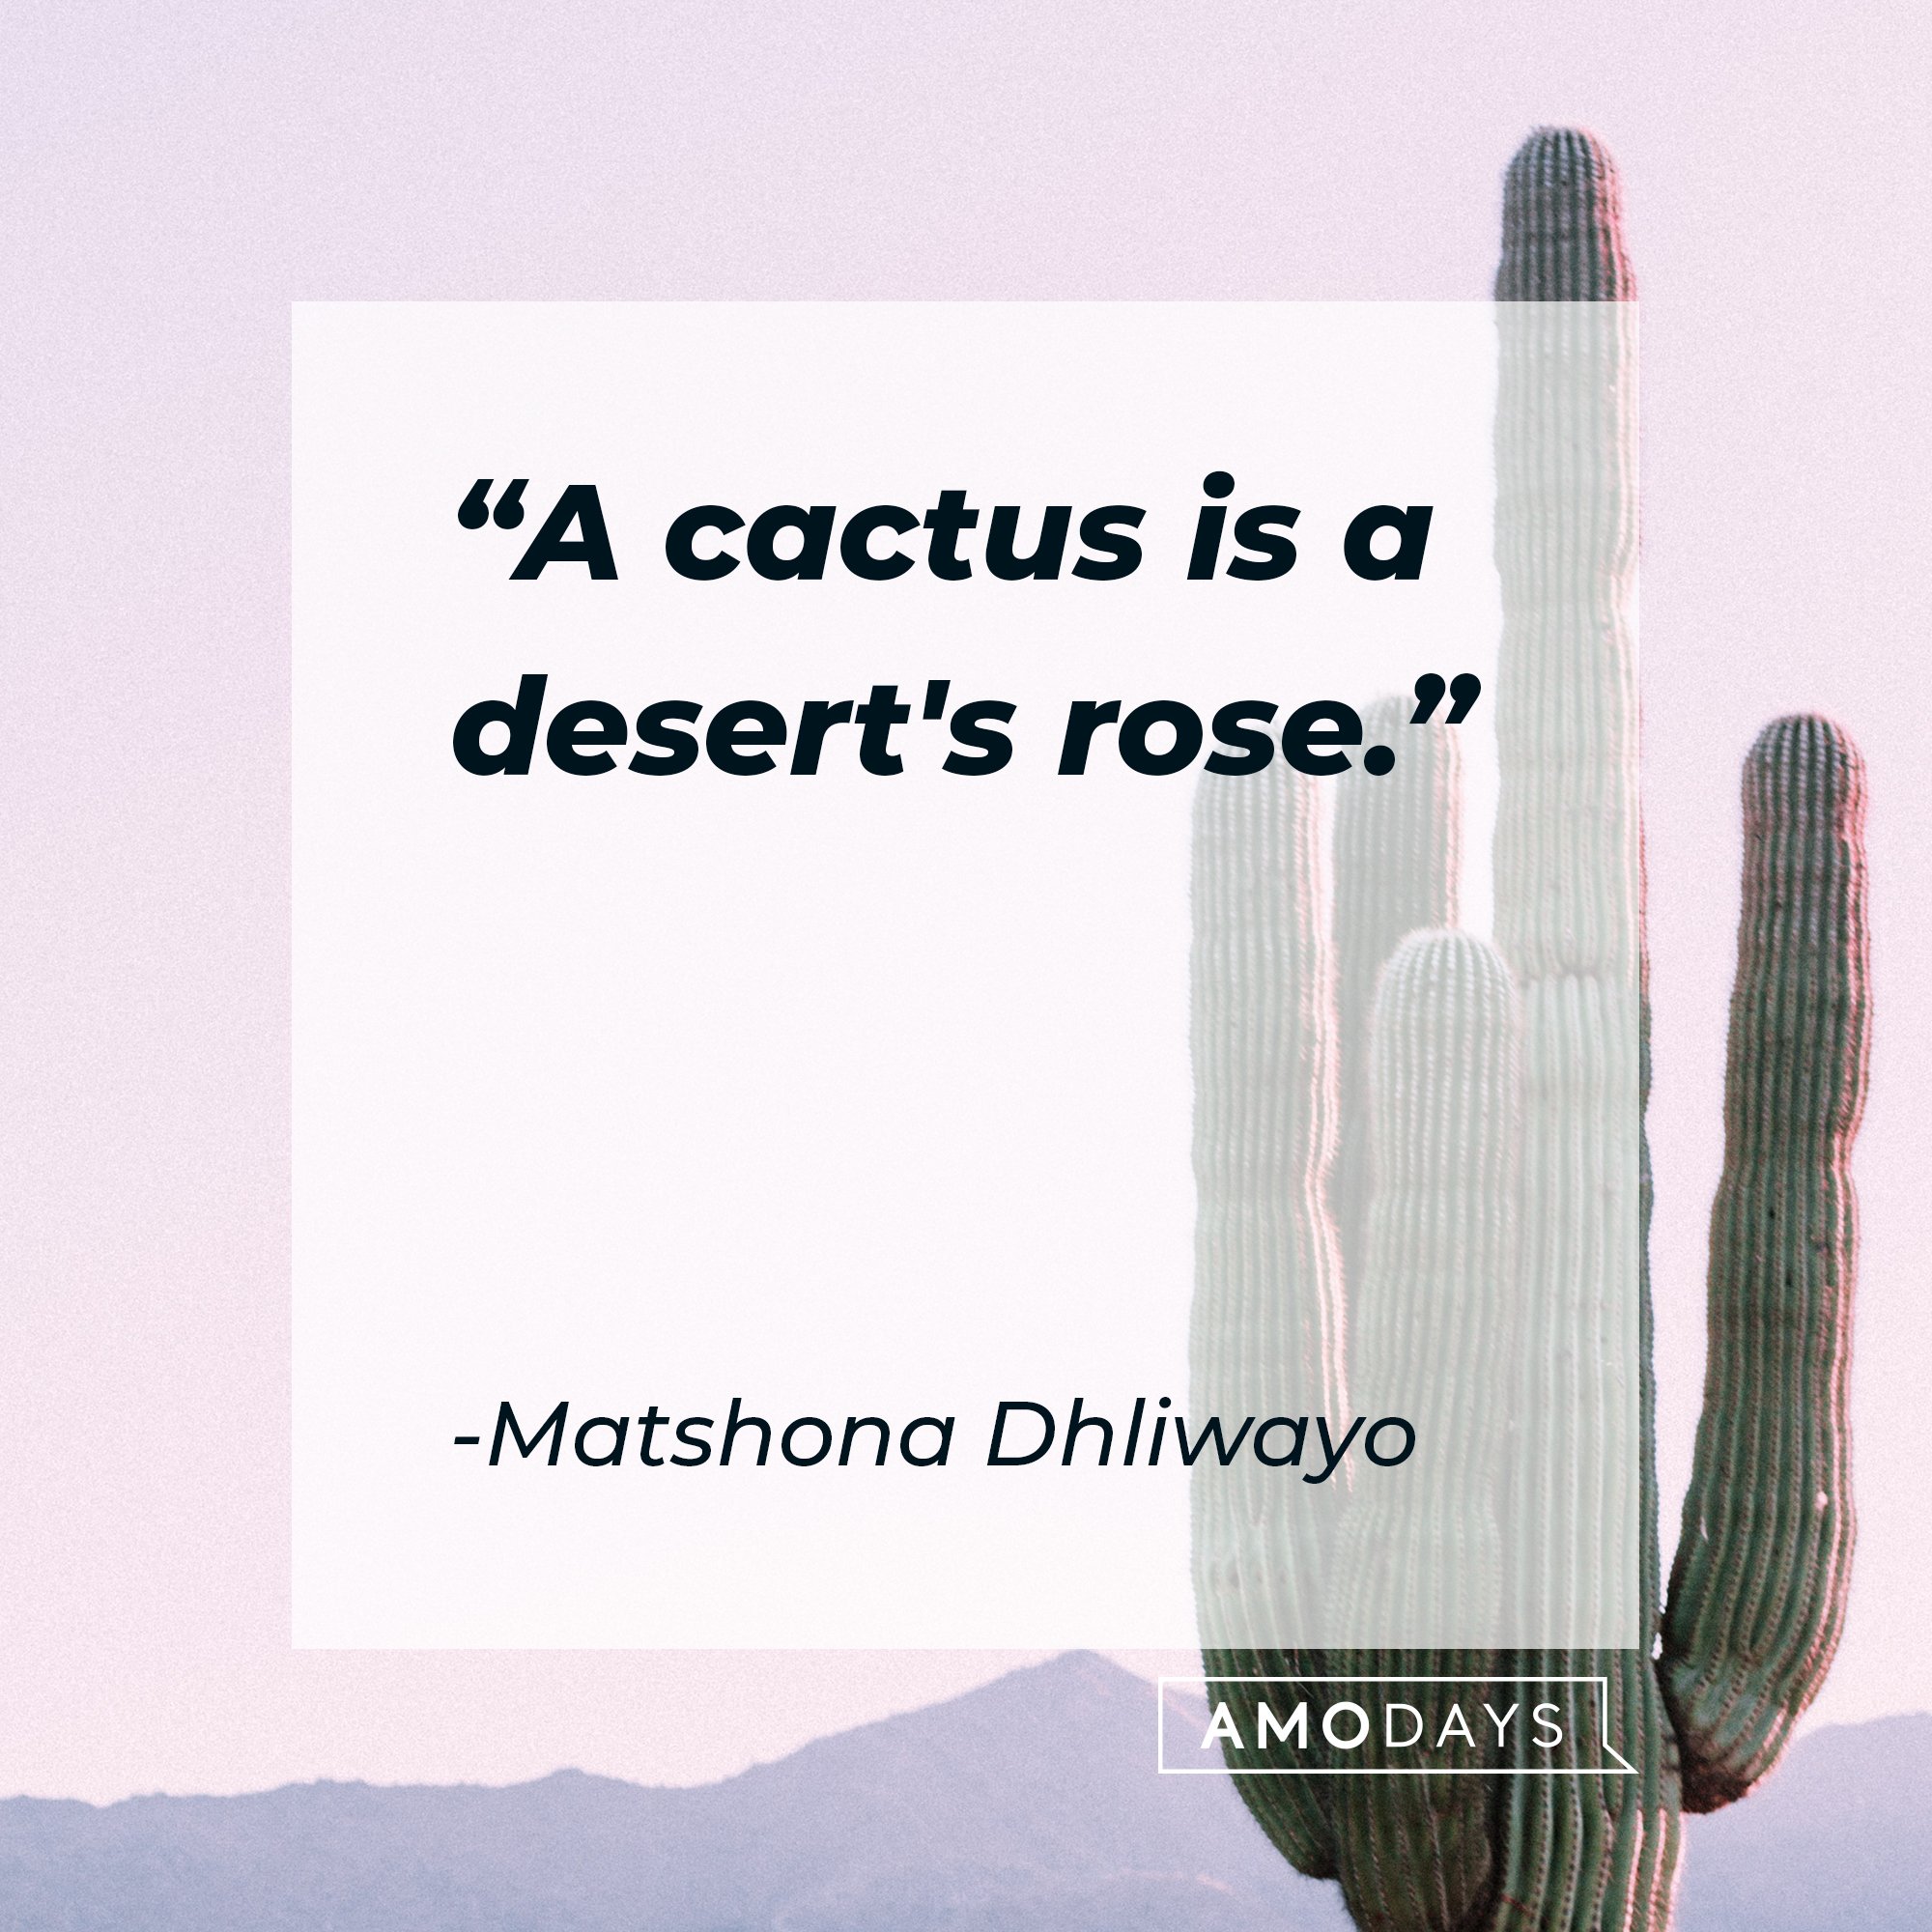  Matshona Dhliwayo’s quote: "A cactus is a desert's rose."  | Image: AmoDays